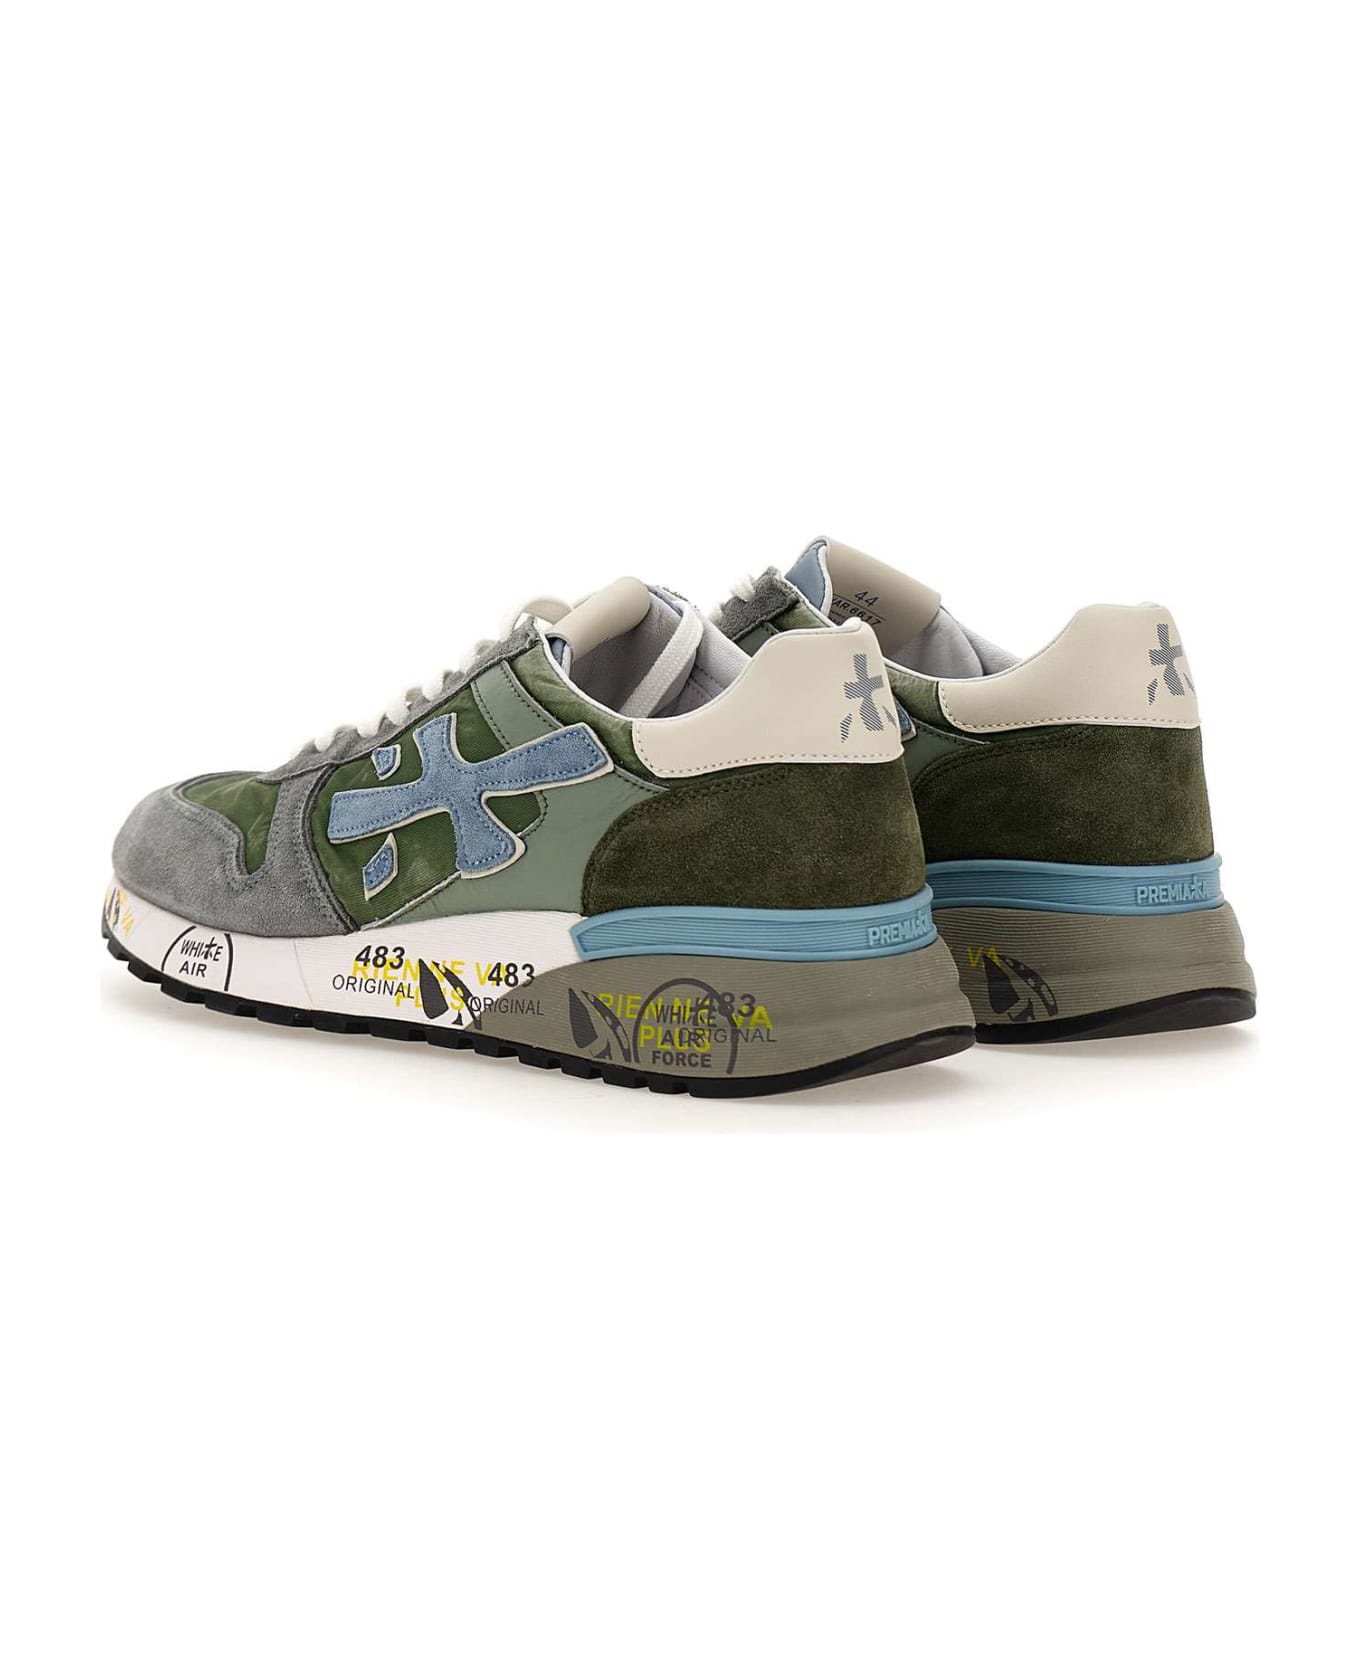 Premiata "mick 6617" Sneakers - Green/grey